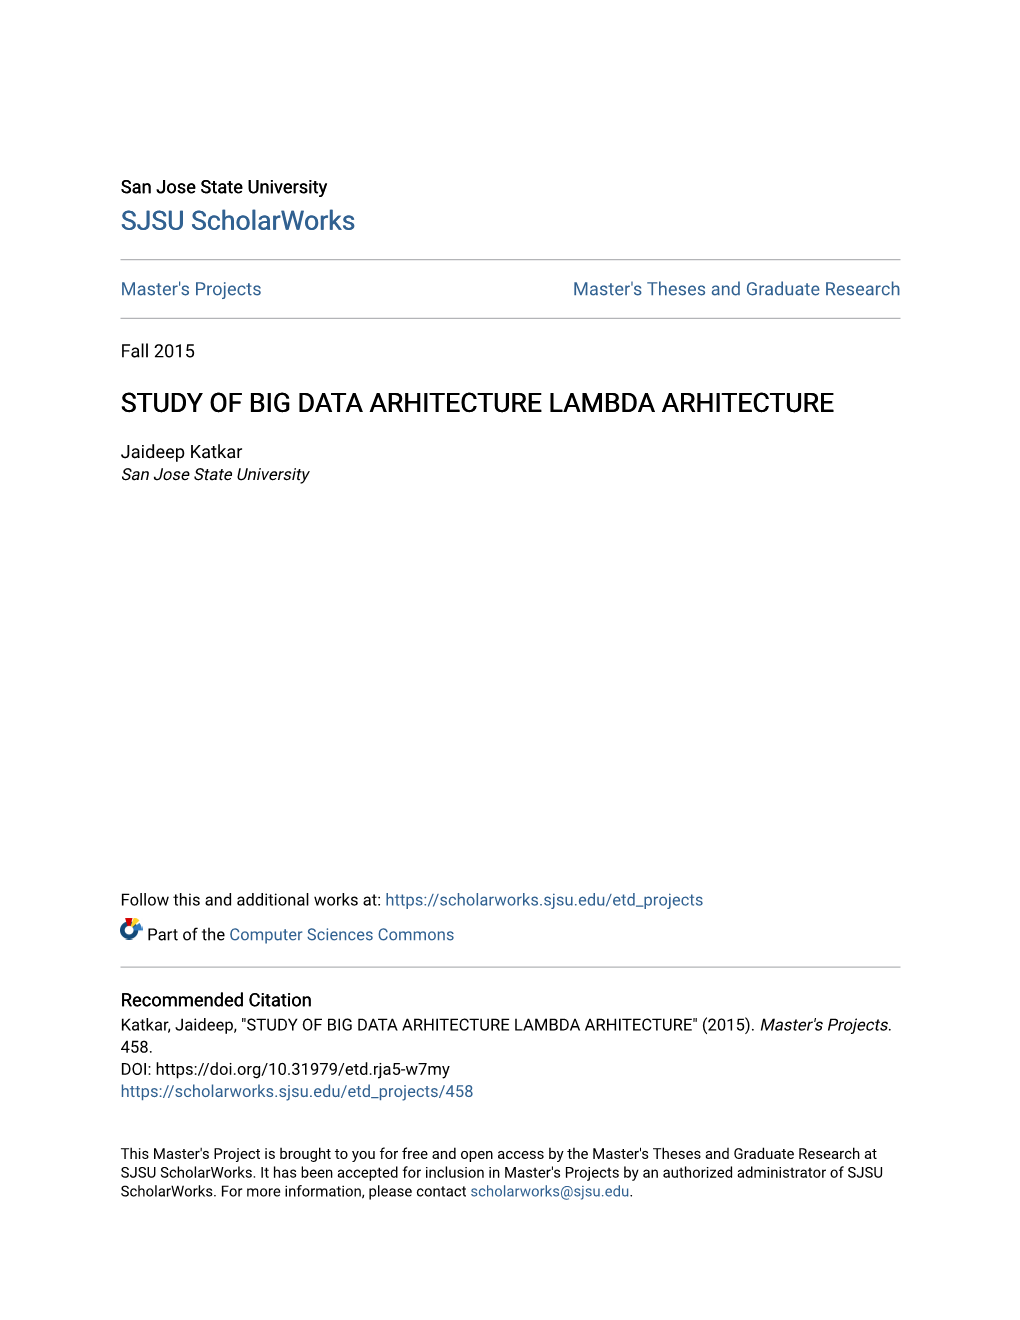 Study of Big Data Arhitecture Lambda Arhitecture